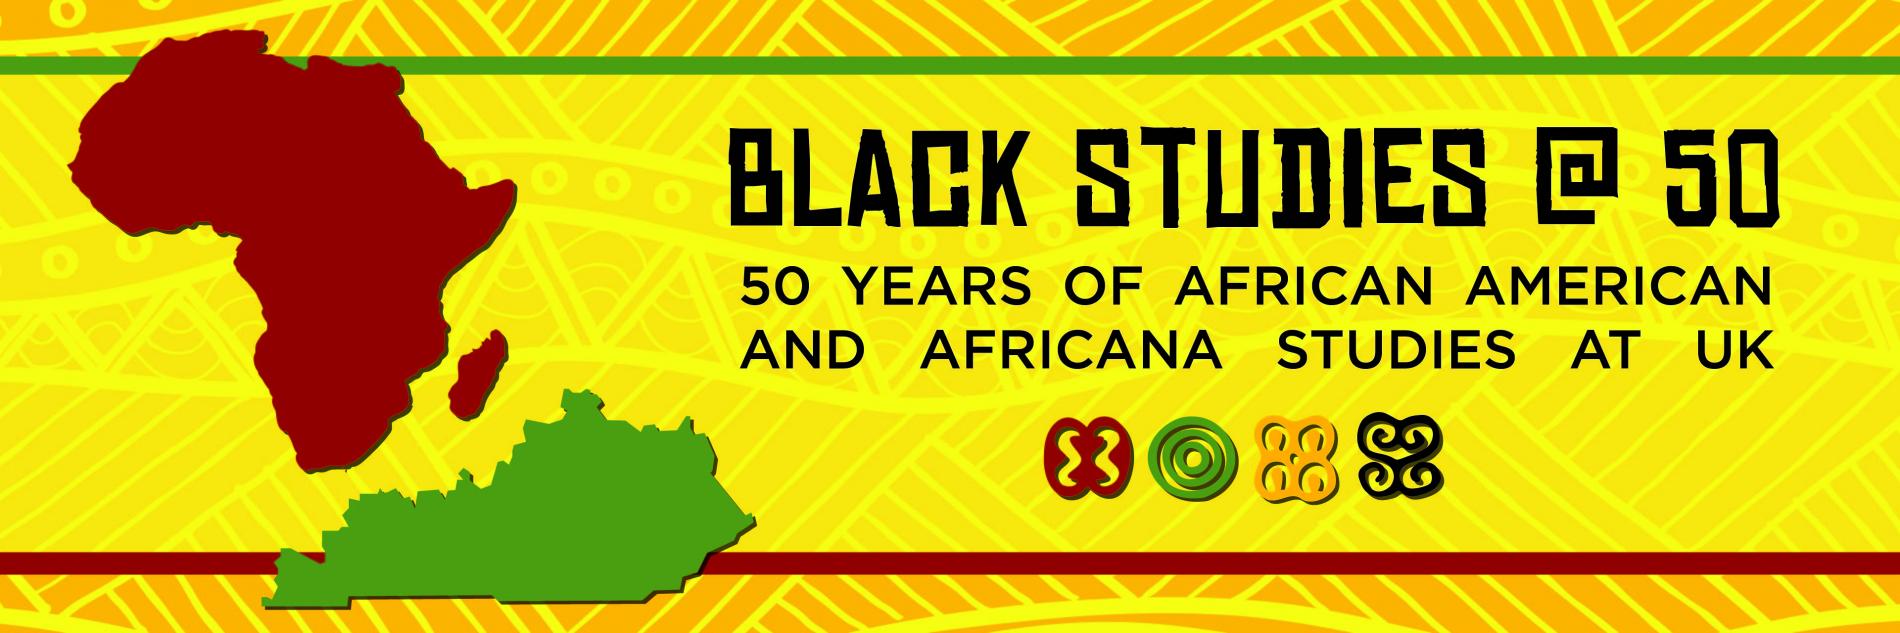 Black Studies @ 50